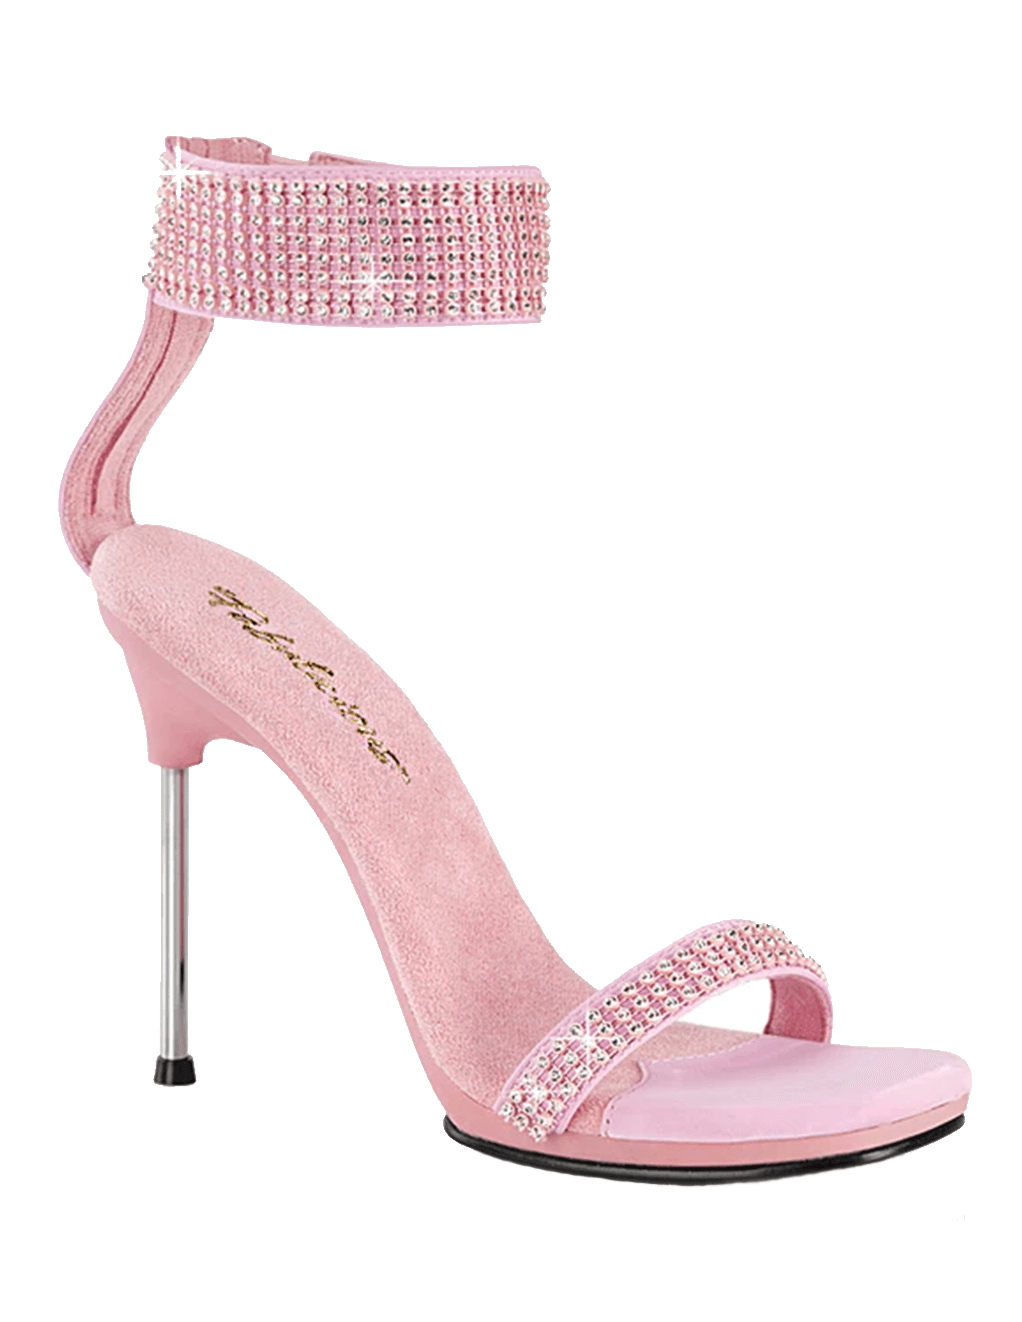 Fabulicious Chic 40 Rhinestone Ankle Cuff Sandal - Baby Pink - Main